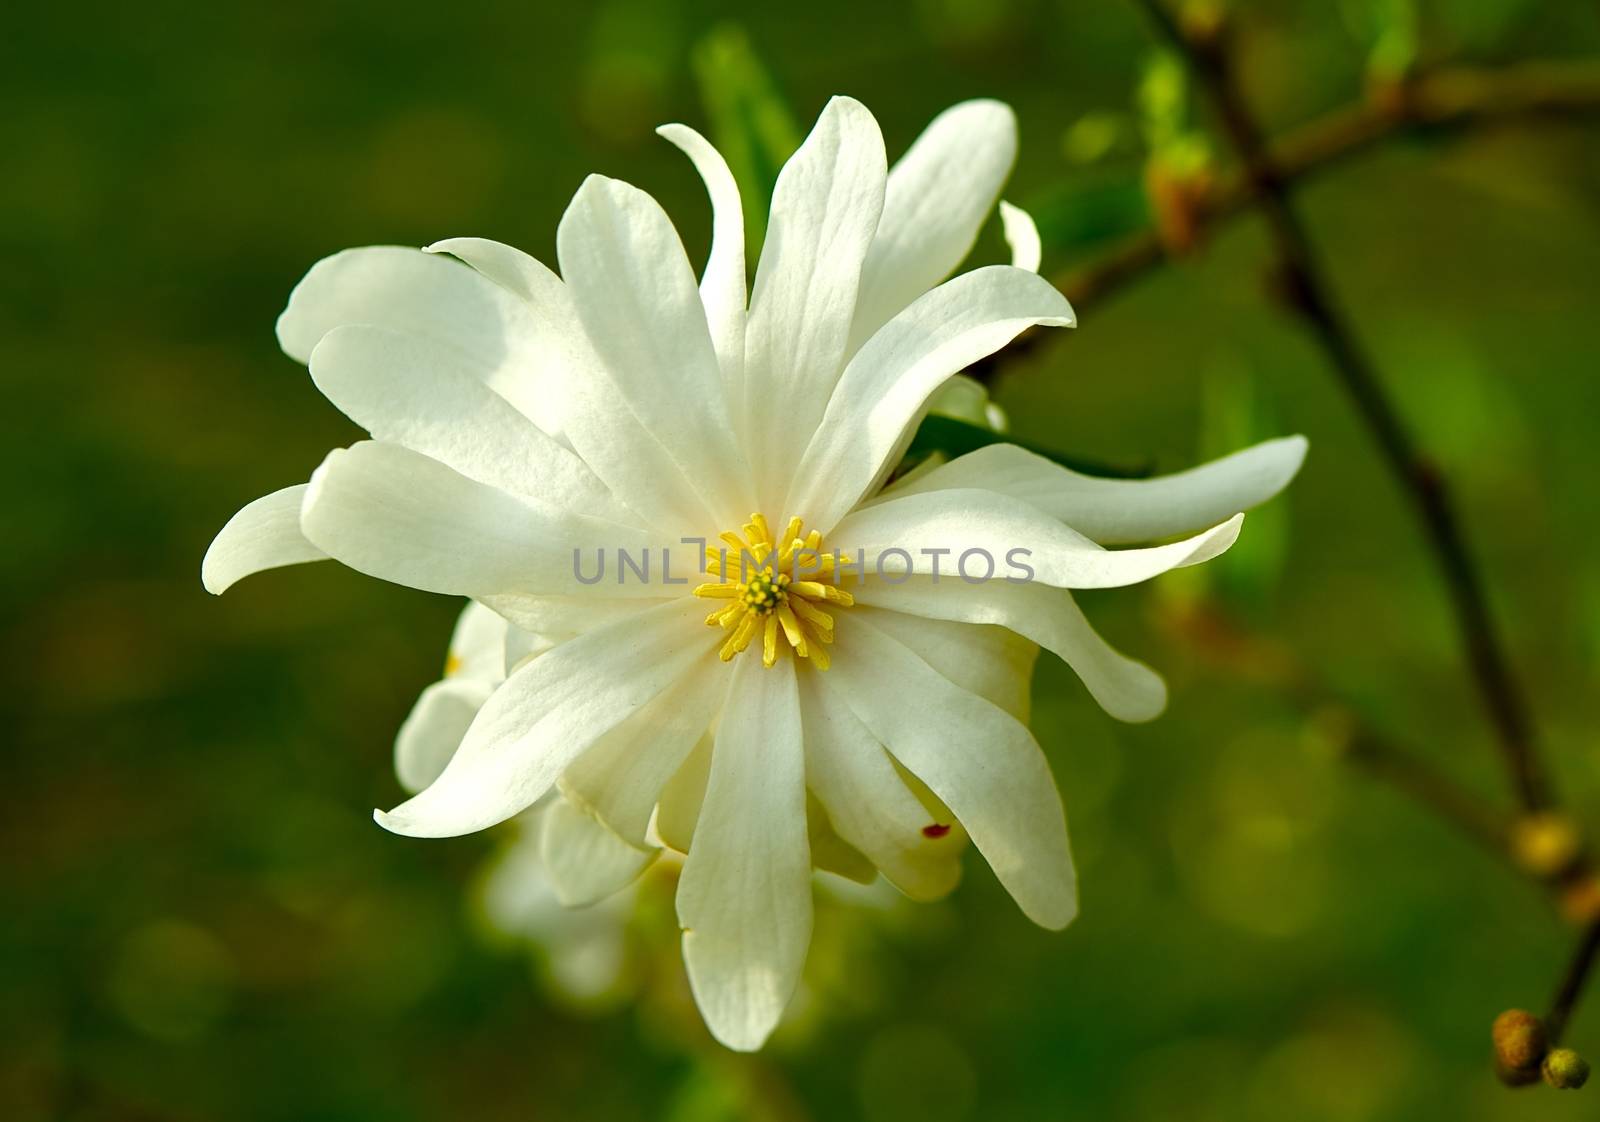 Star Magnolia Closeup. Magnolia Stellata, sometimes Called the Star Magnolia - Native to Japan.